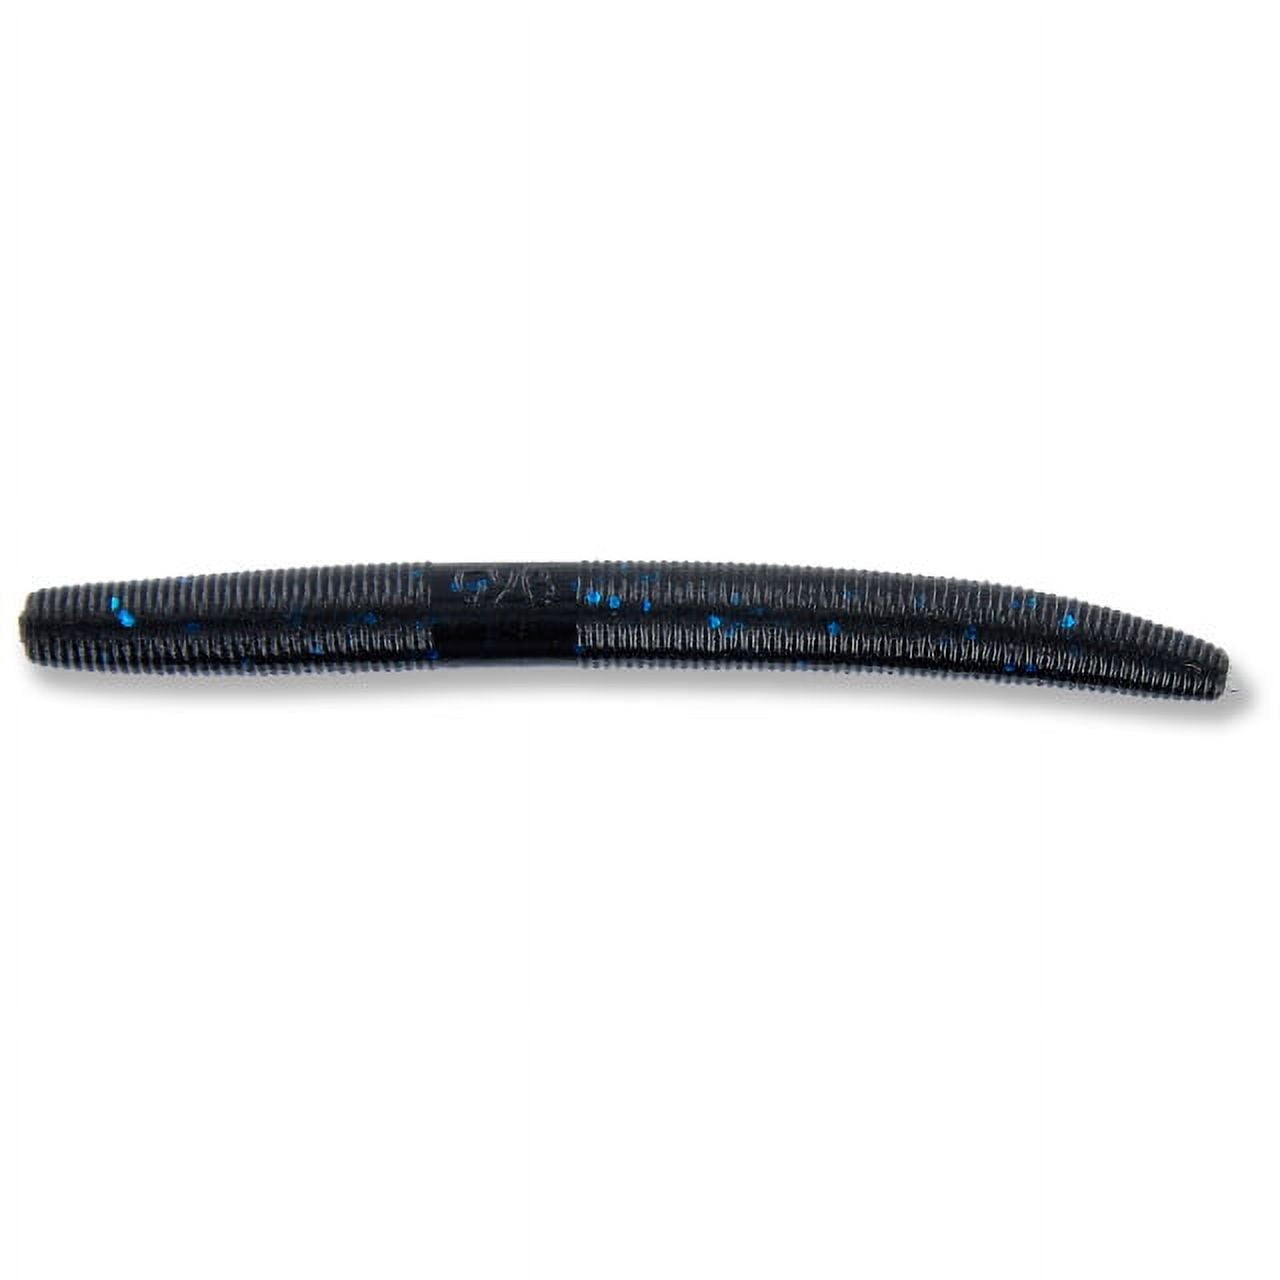 Yamamoto Baits Senko Worm, 10 Pack, 4in, Black/Large Blue Flake